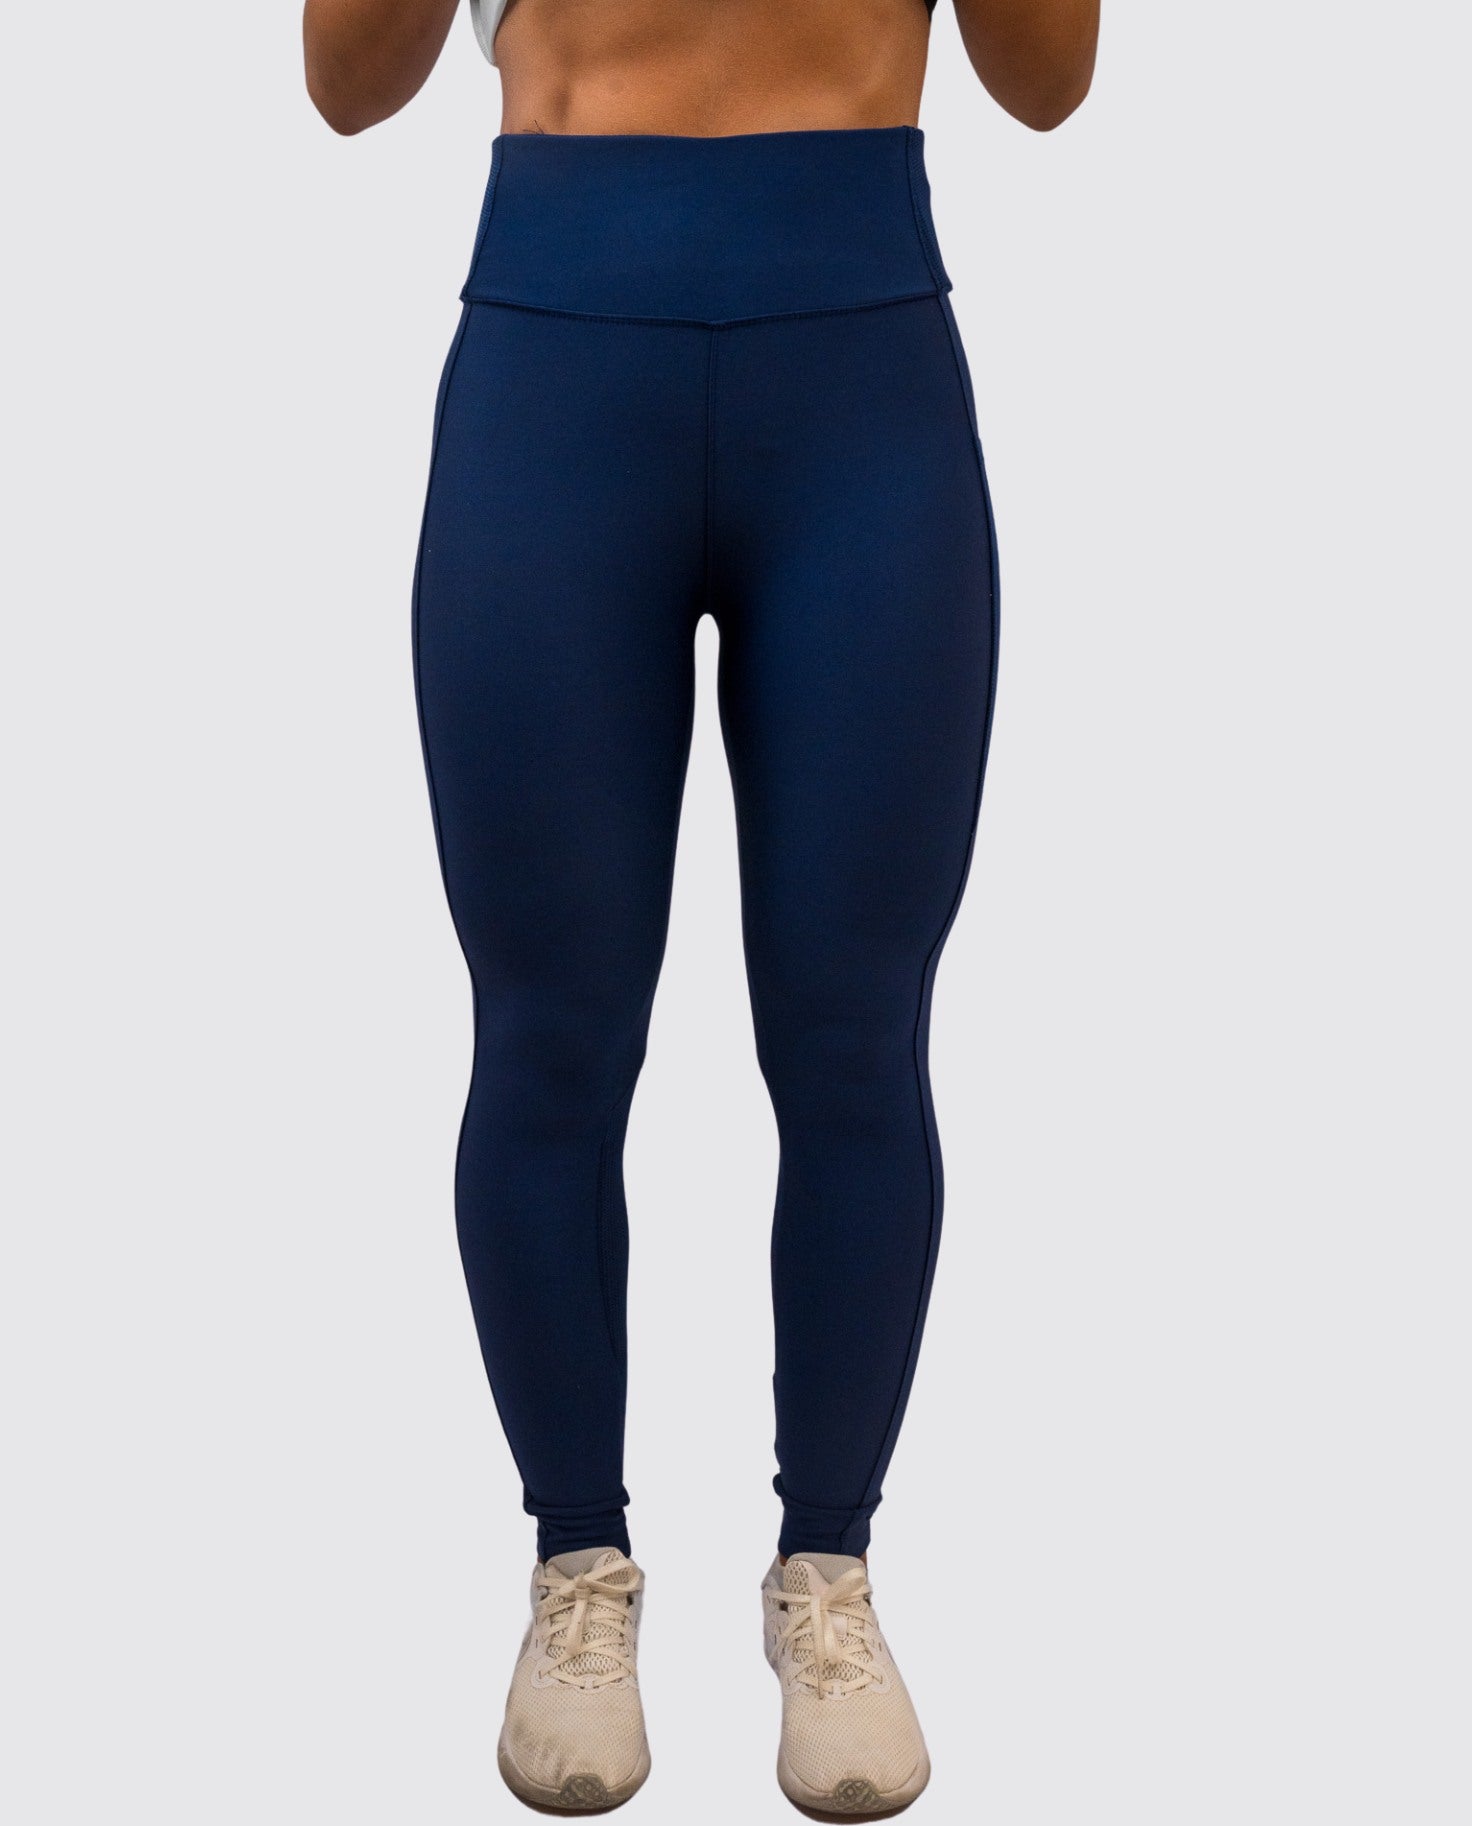 BuffBunny Leggings  Navy blue leggings, Leggings, Clothes design